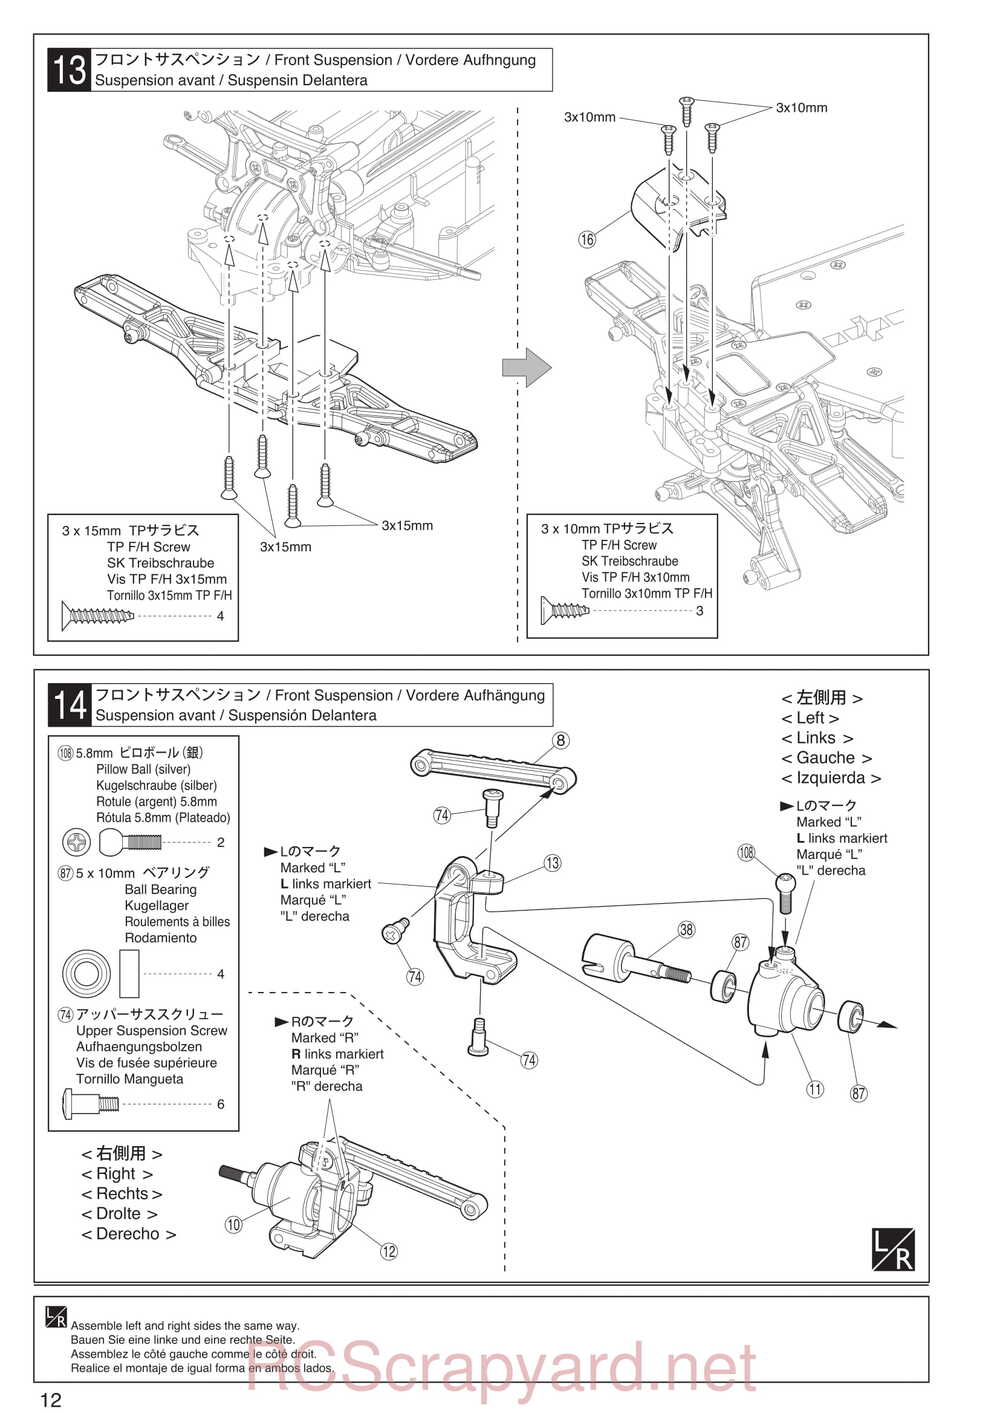 Kyosho - 30930T1 - EP Fazer KOBRA - Manual - Page 12